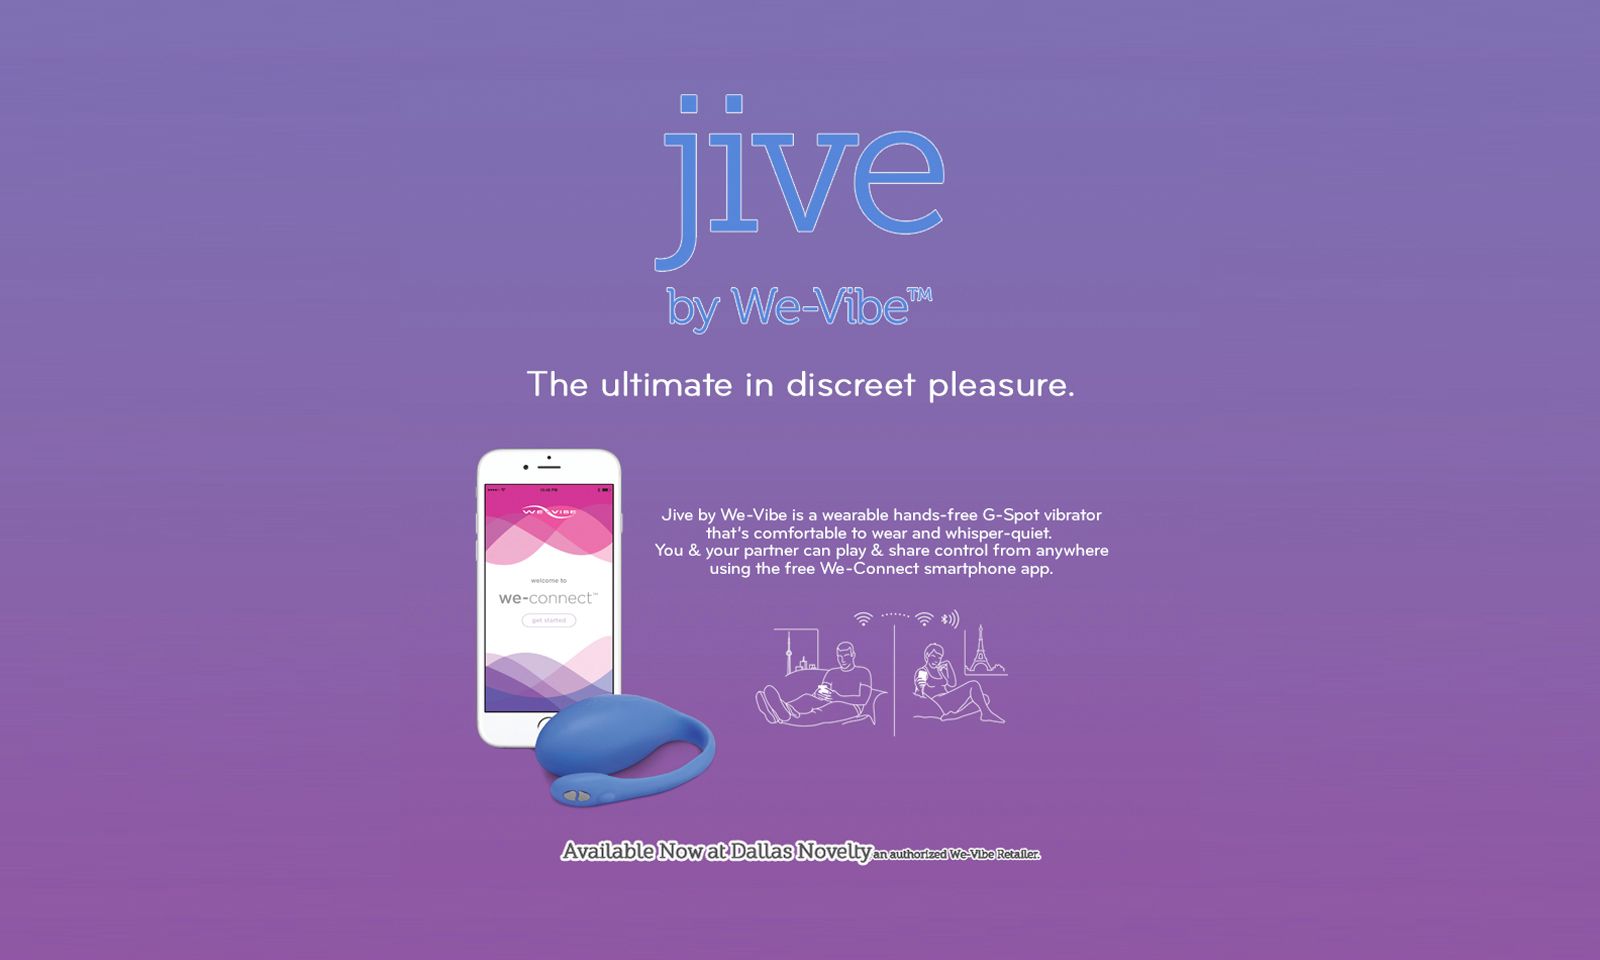 Dallas Novelty Carrying We-Vibe’s Jive 10 Wearable Vibrator